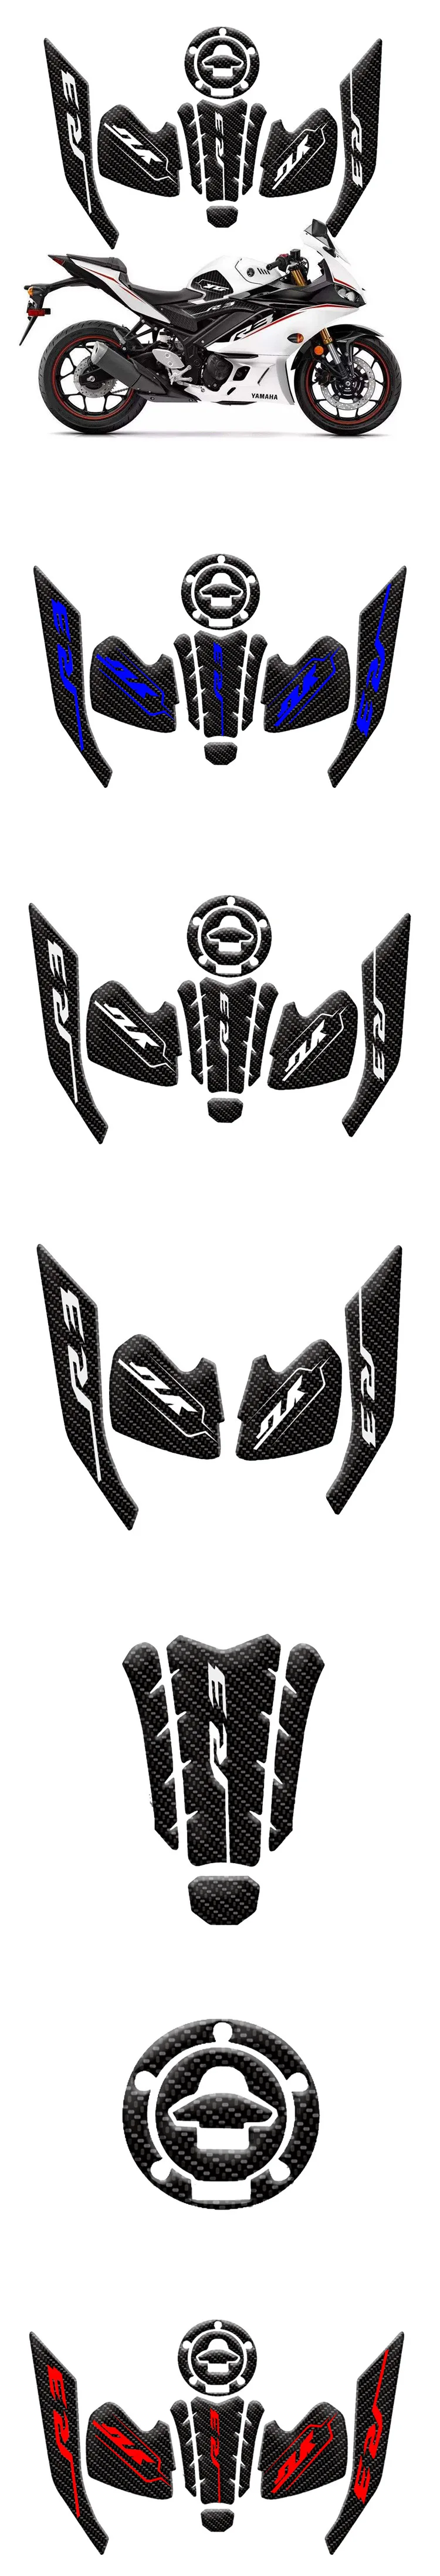 Fit Yamaha Stickers for helmet tank RED & Carbon Fiber 5 pcs YZF R3 R1S FJR1300 